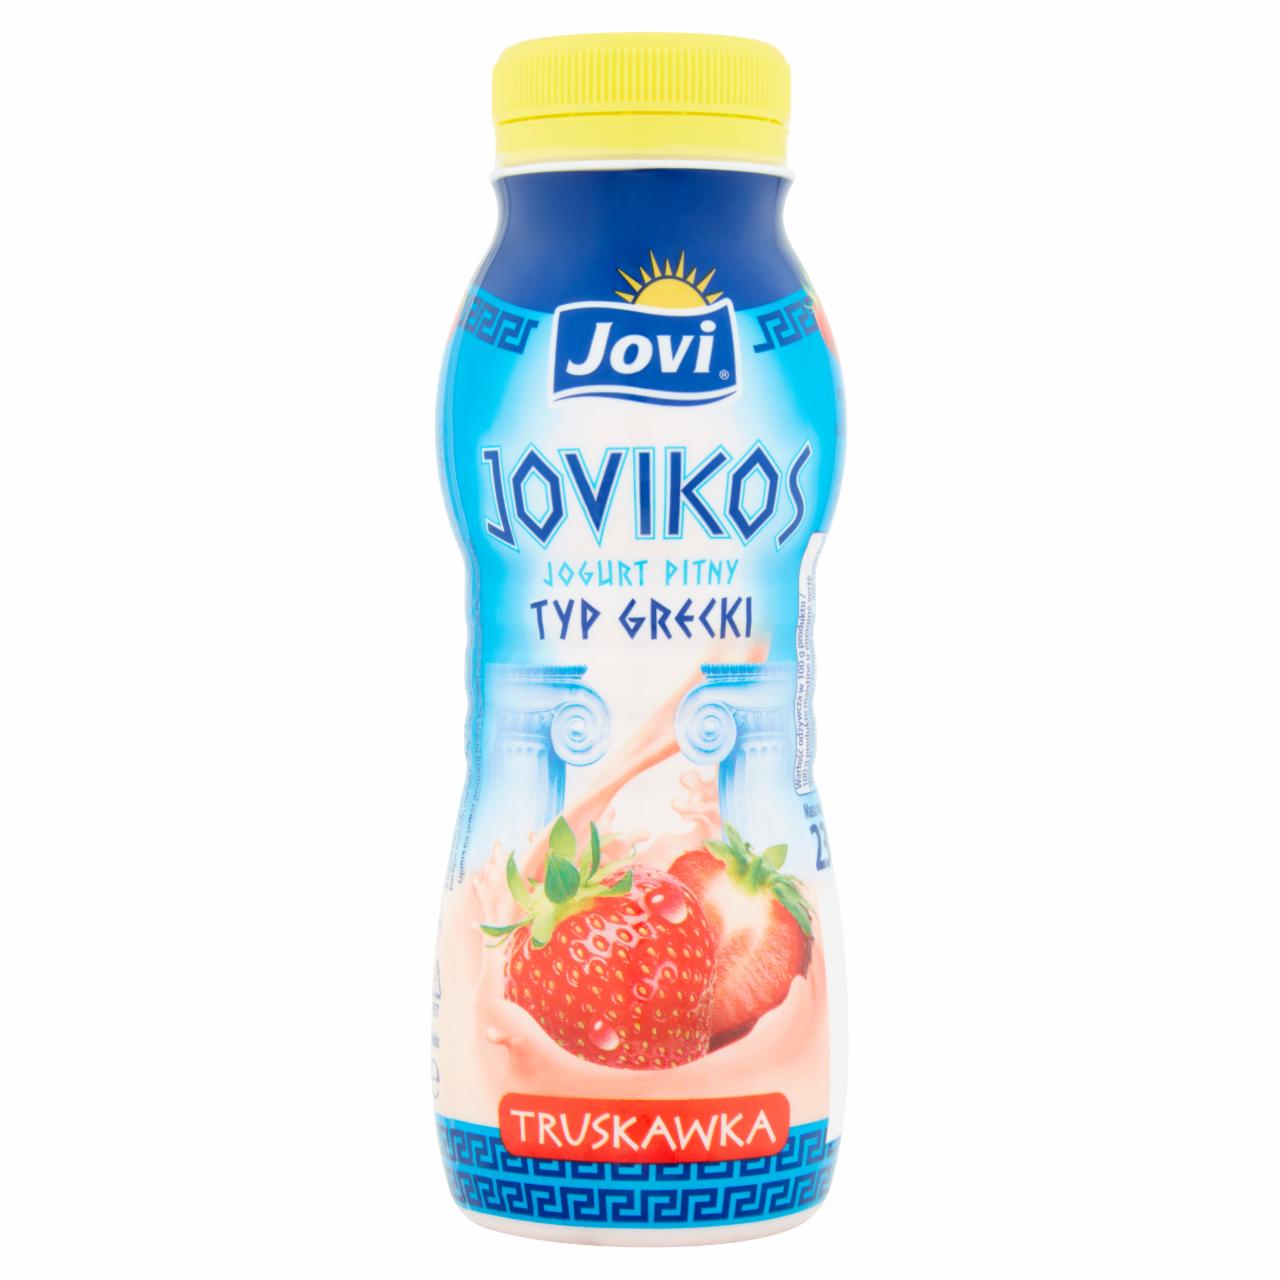 Zdjęcia - Jovi Jovikos Jogurt pitny typ grecki truskawka 230 g